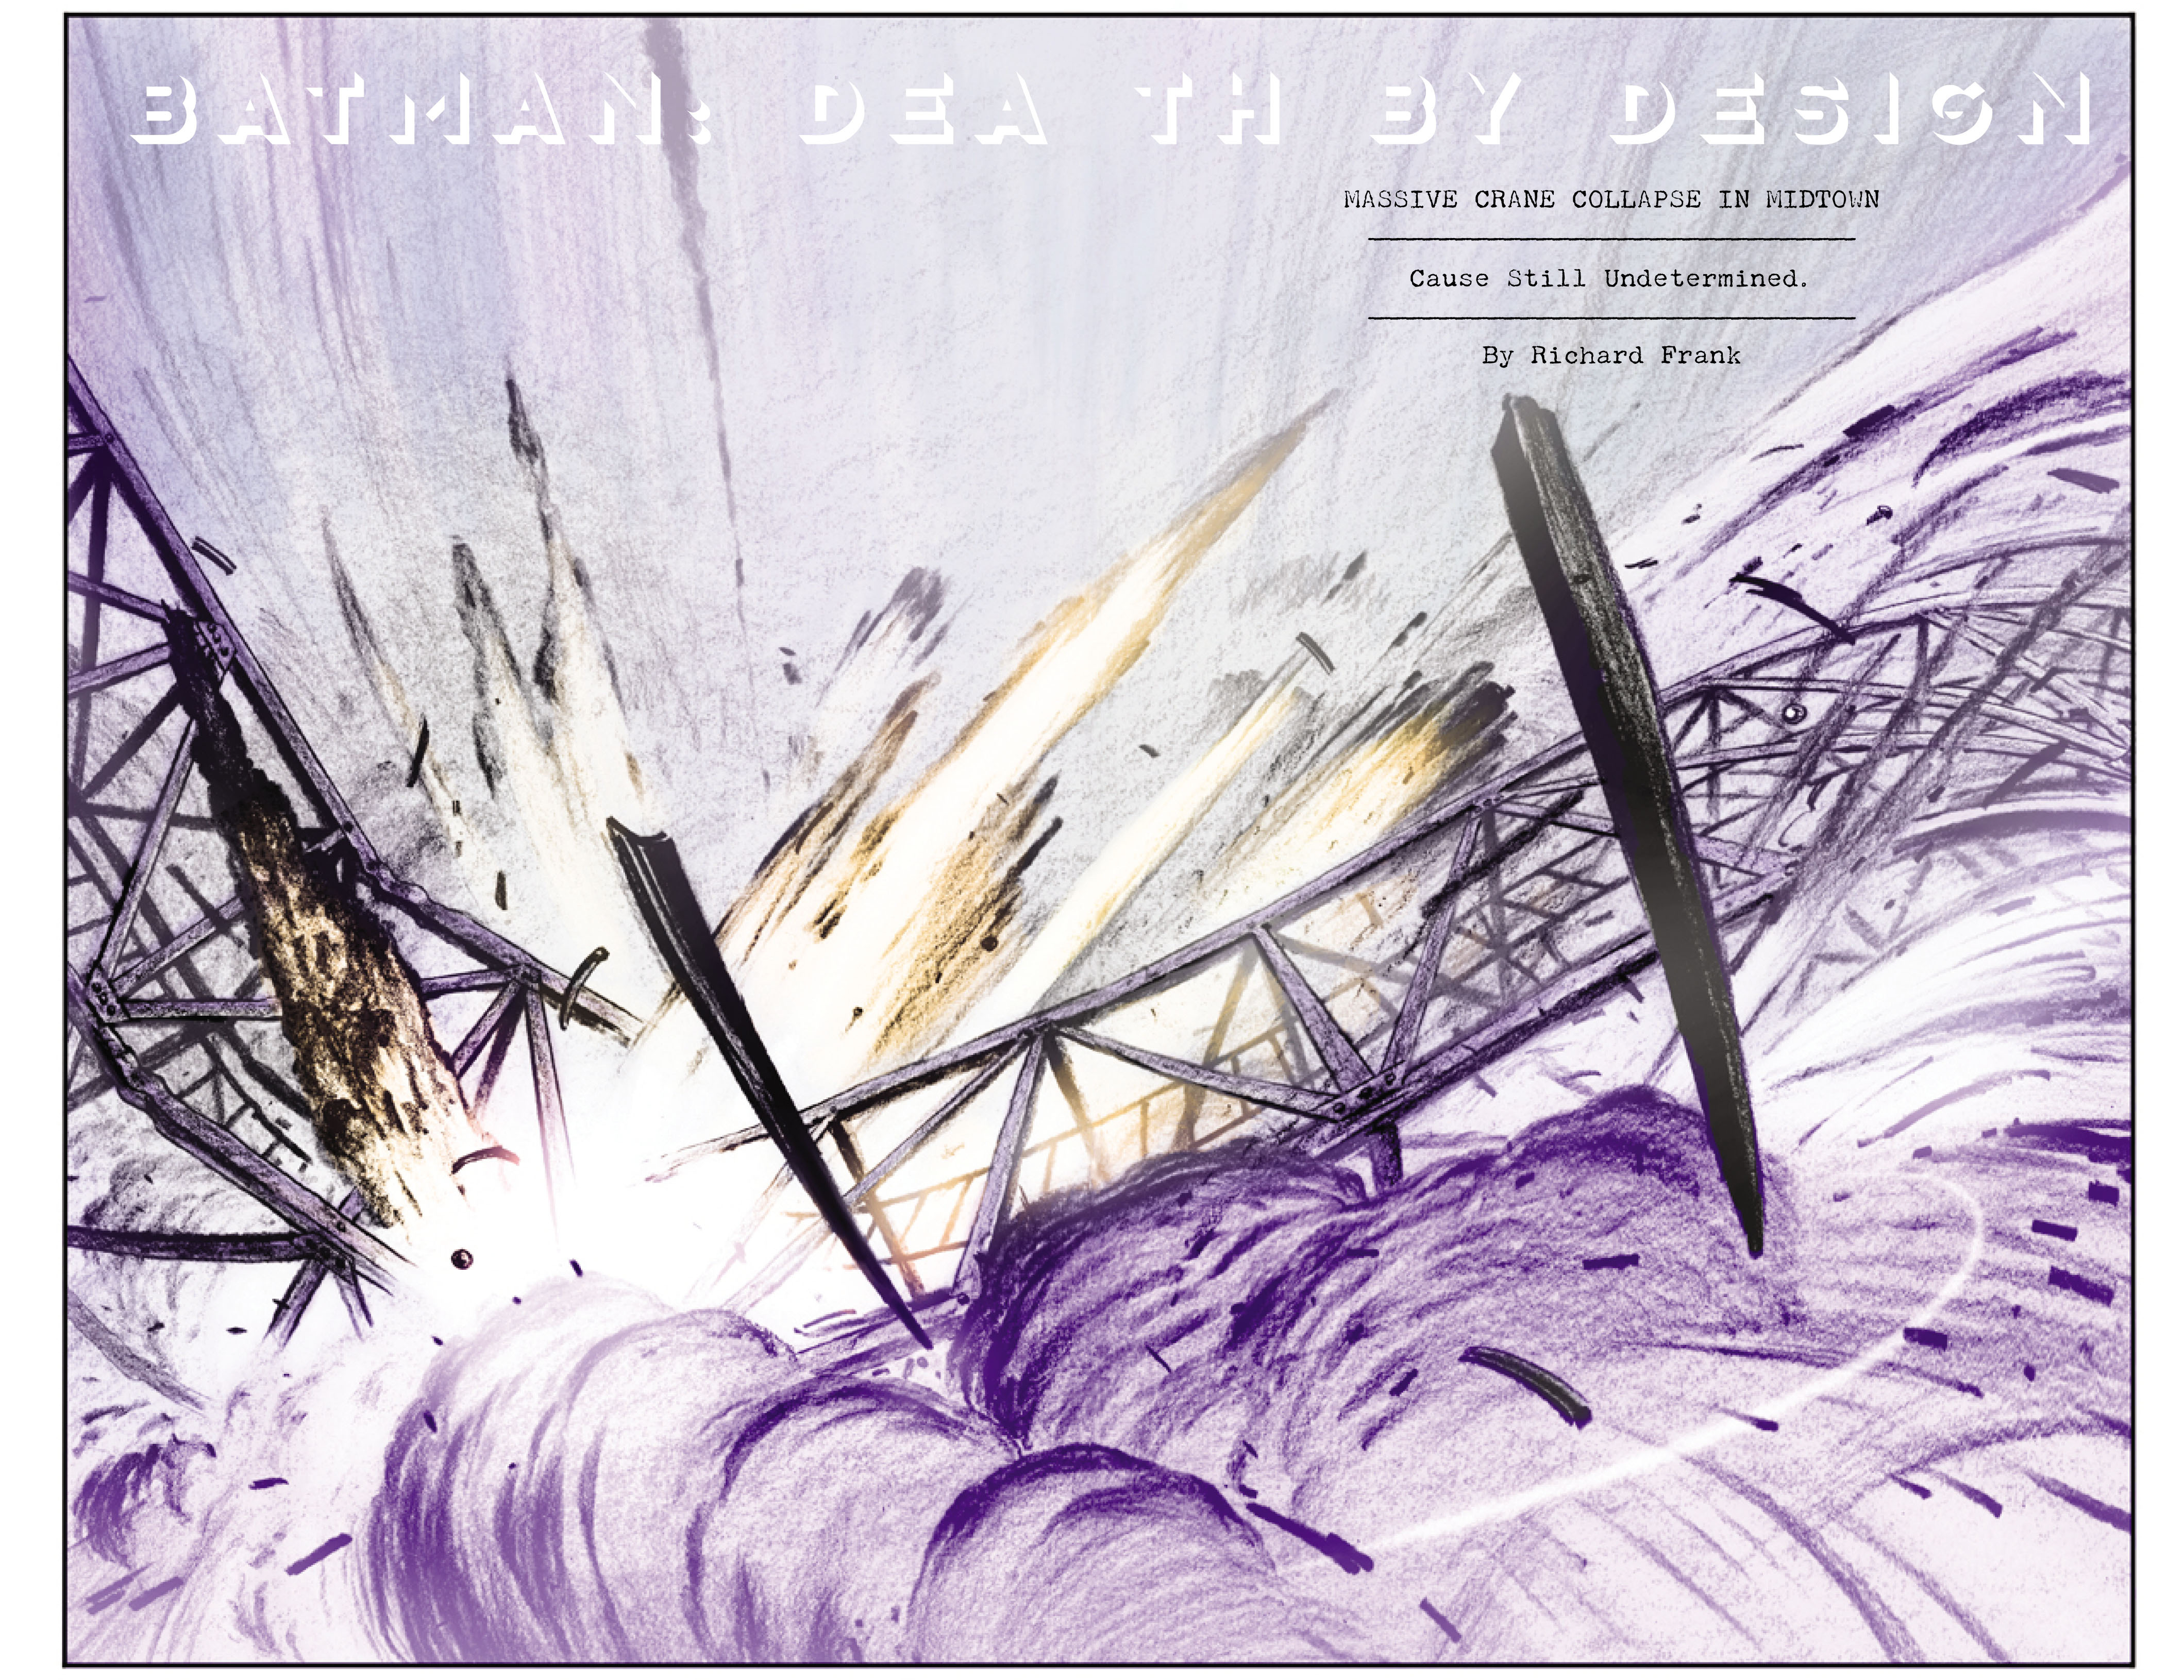 Read online Batman: Death By Design comic -  Issue # Full - 18